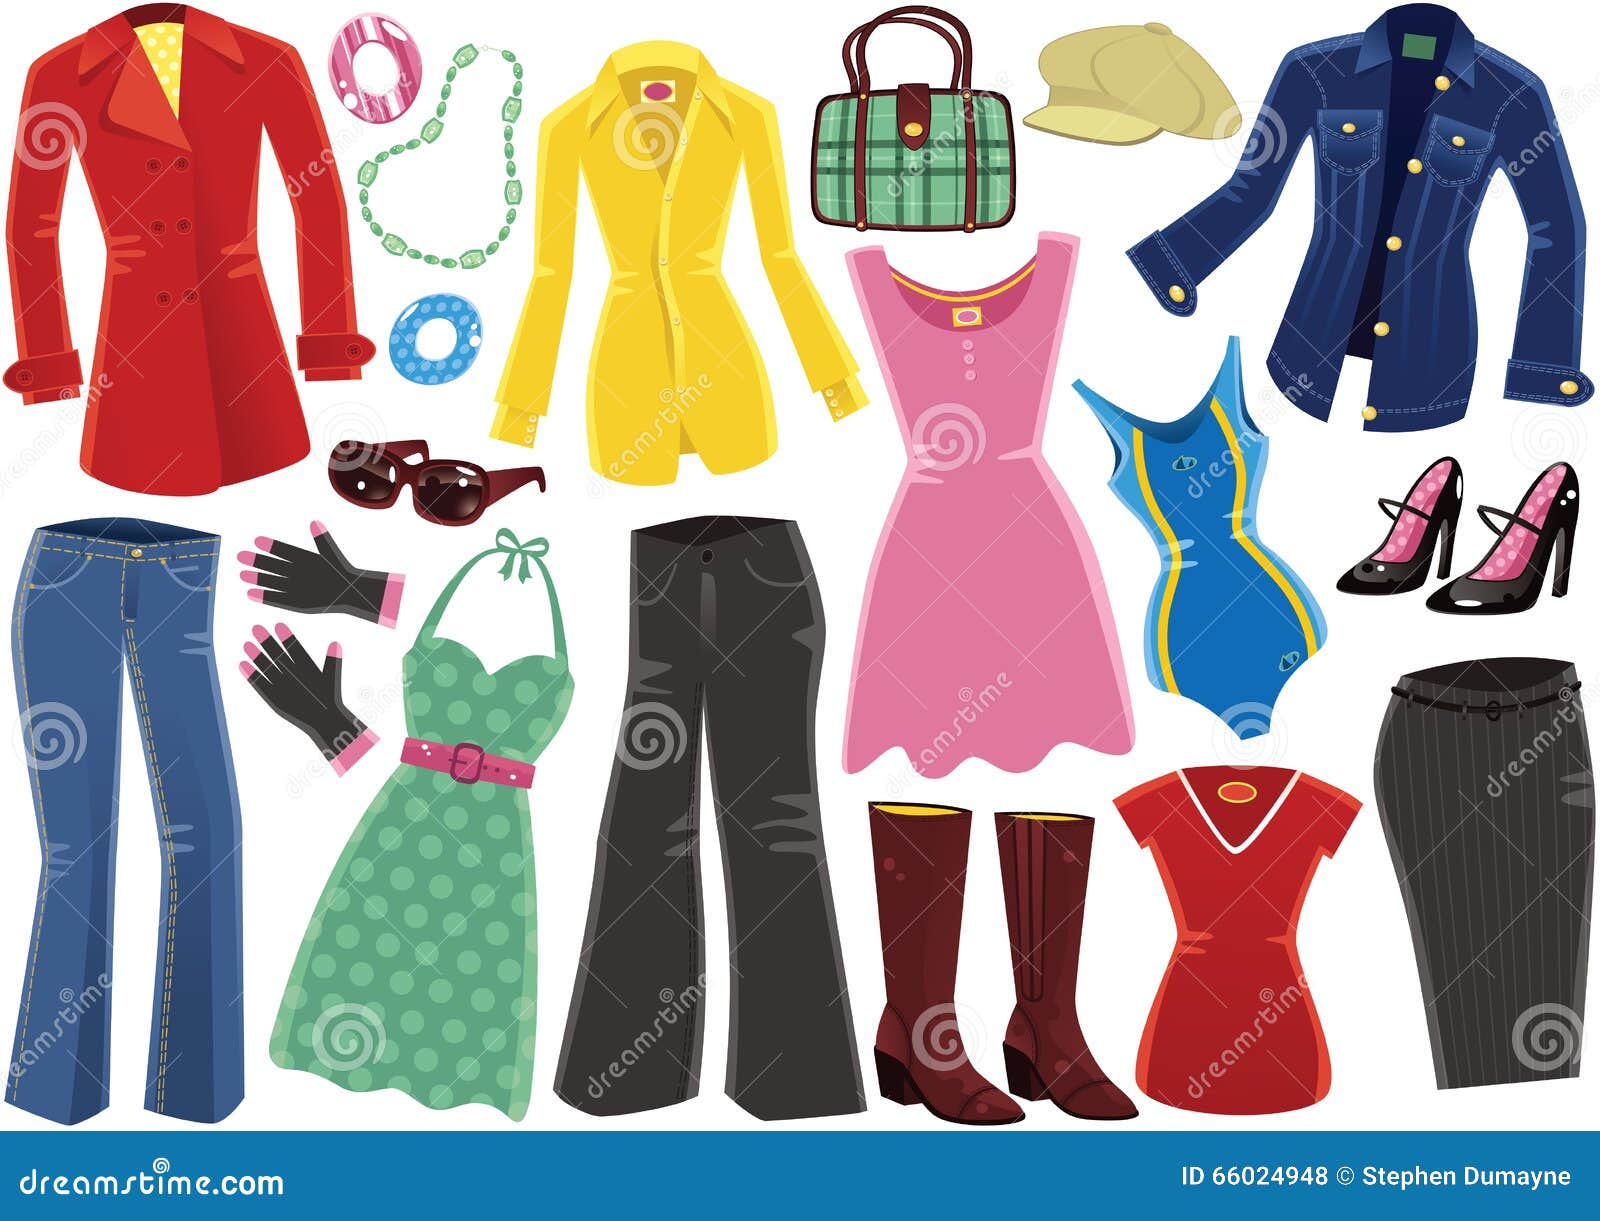 Various Female Clothing Items Stock Vector - Illustration of denim ...